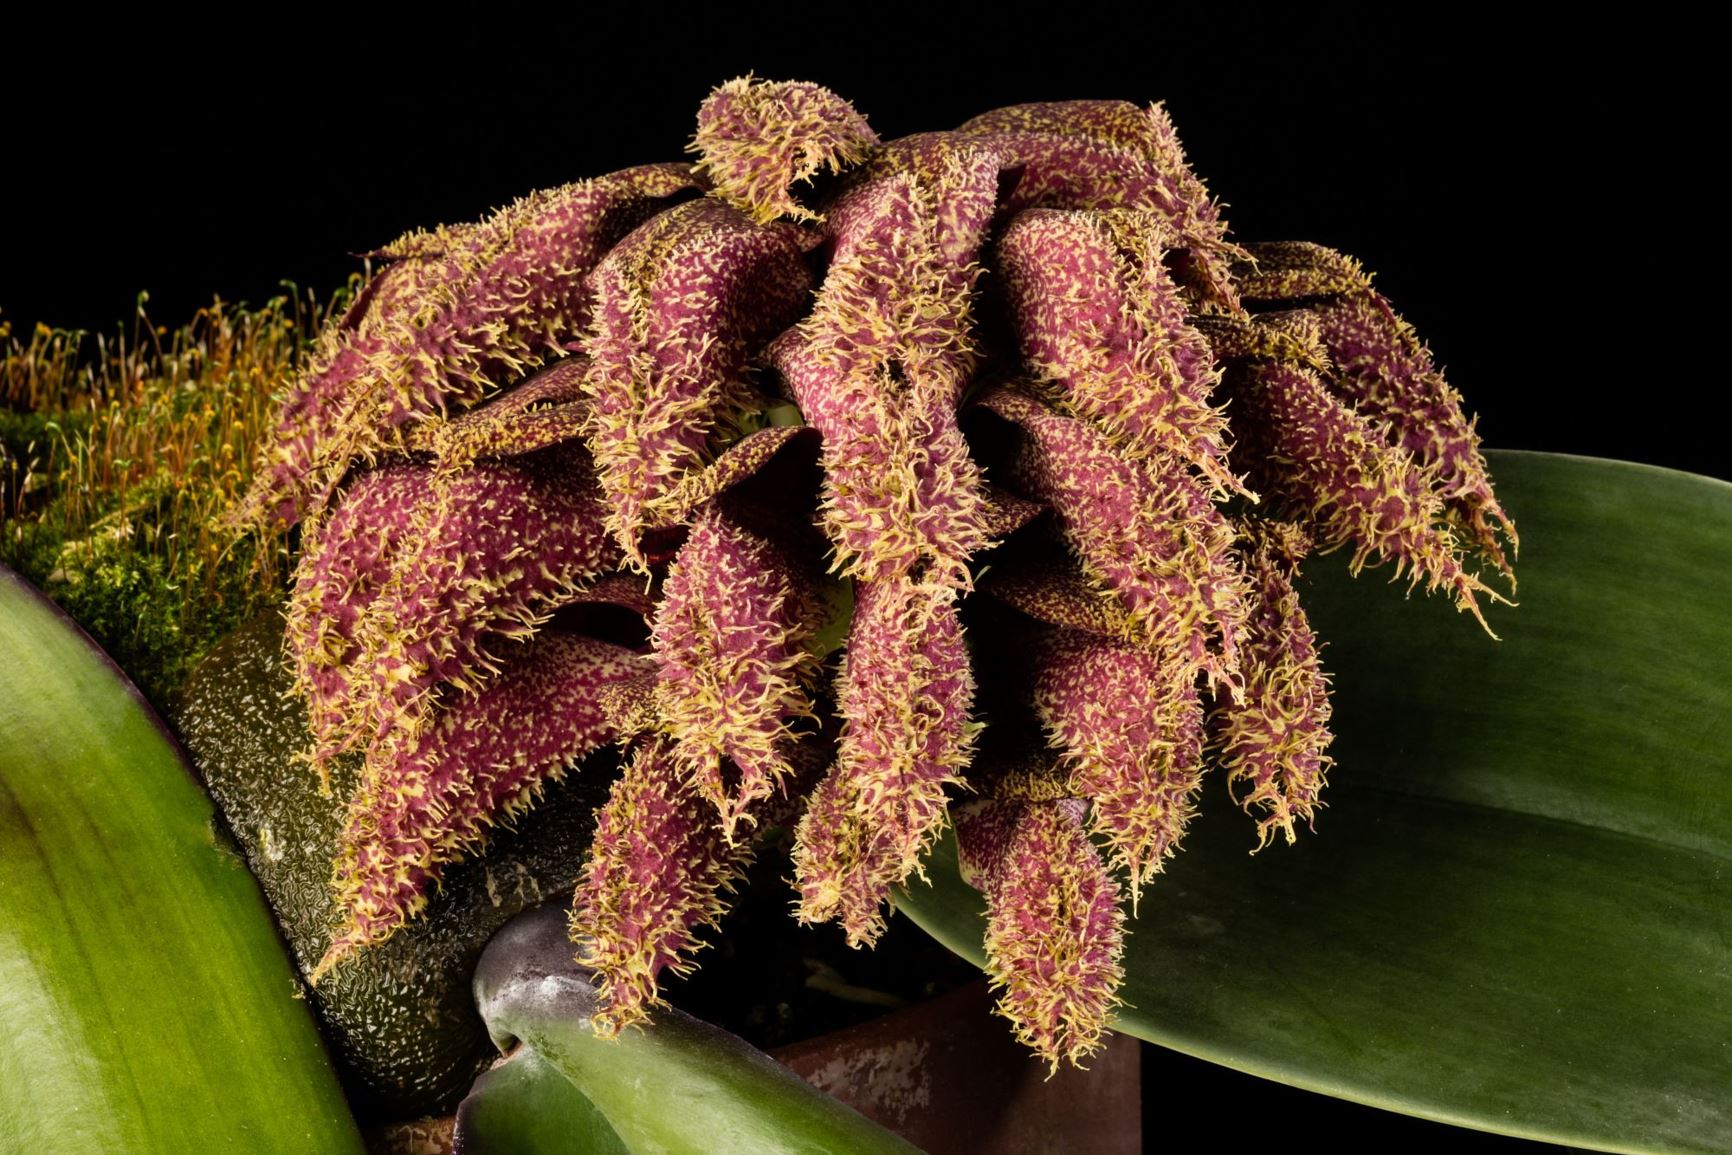 Bulbophyllum phalaenopsis 'Bucky' - Phalaenopsis Gigantea-like Bulbophyllum clone